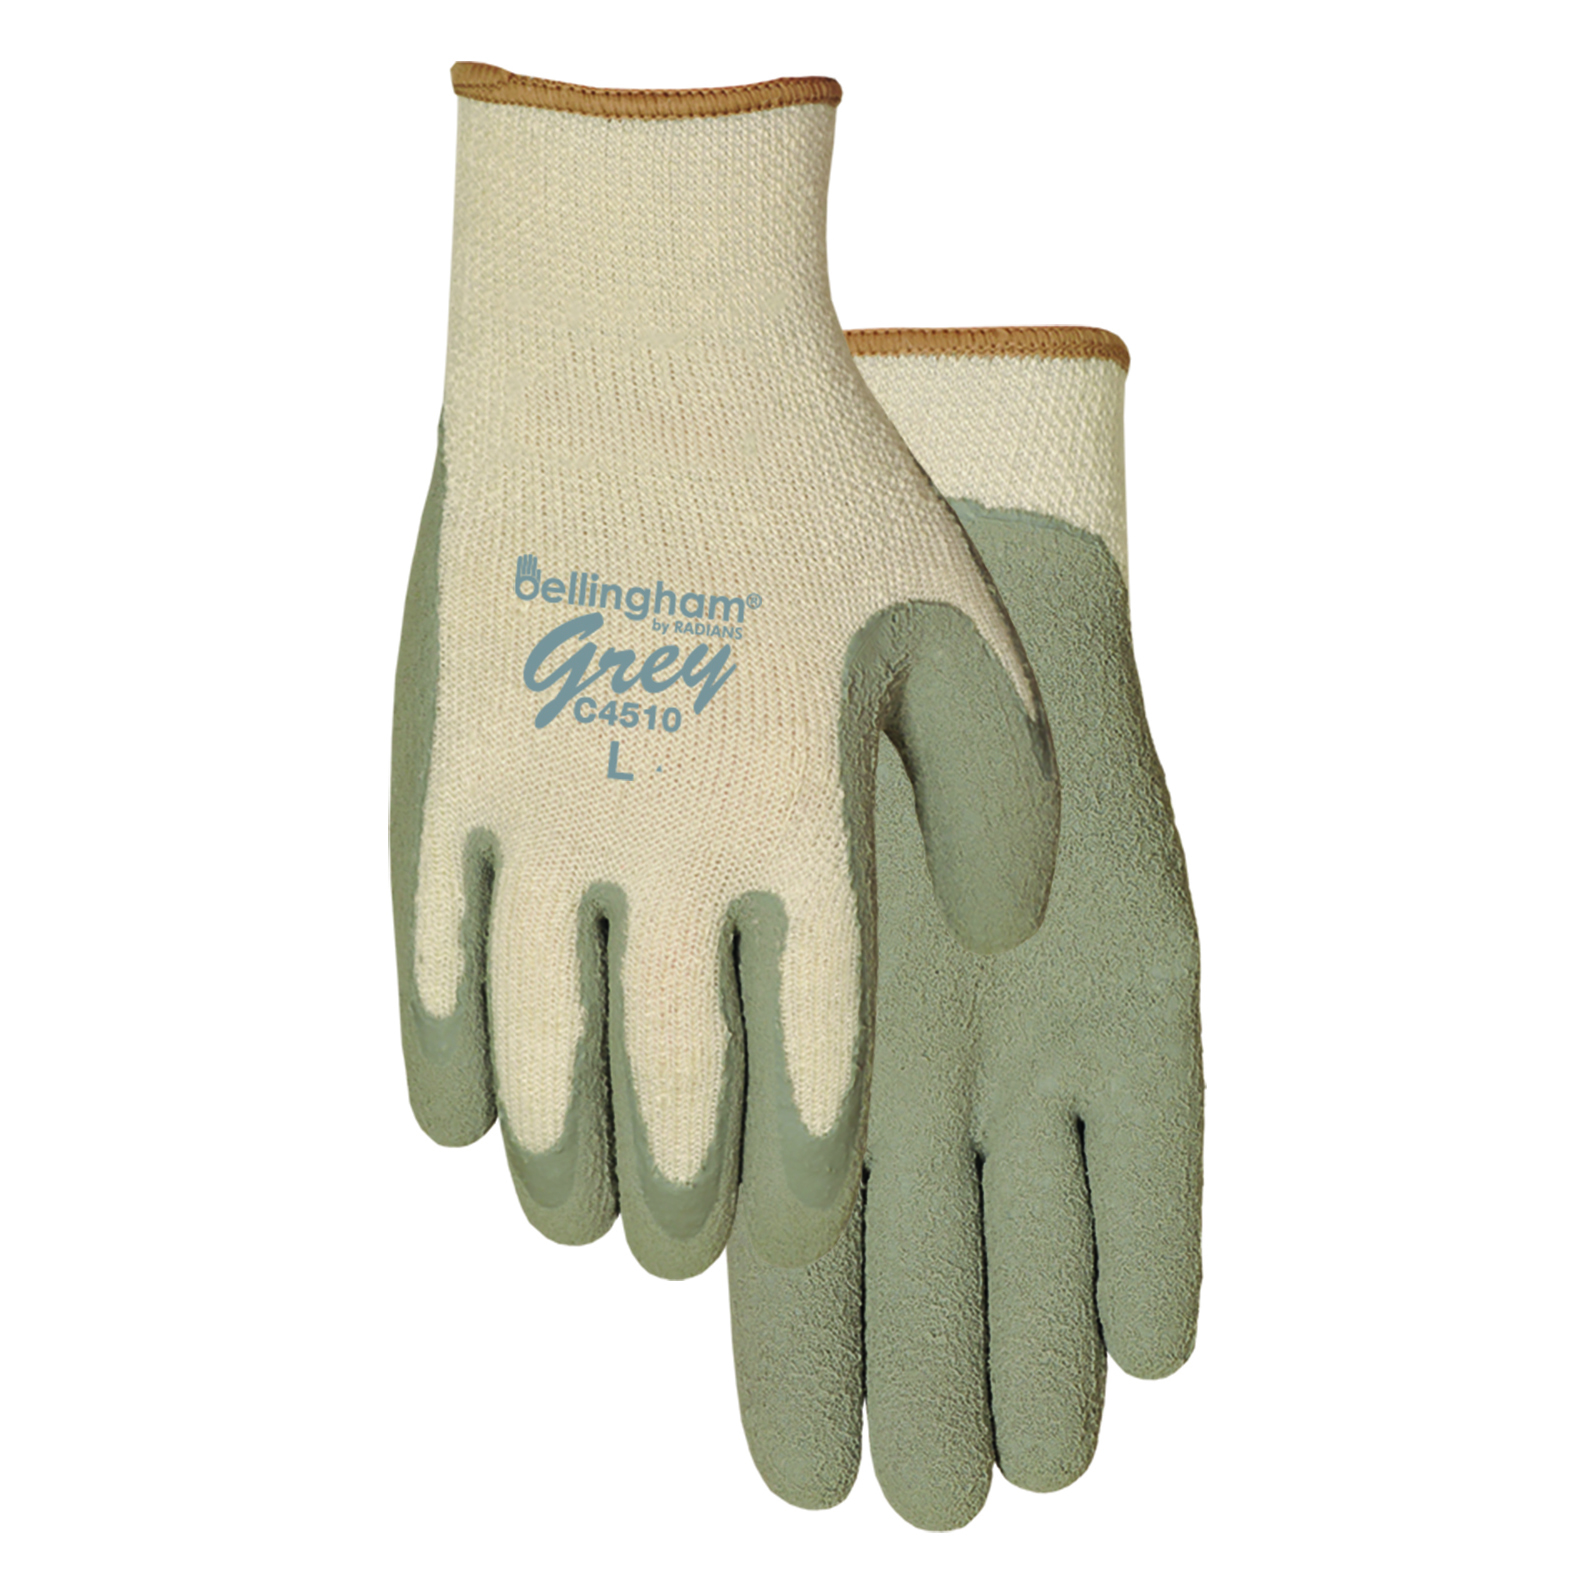 Bellingham 4510 Grey™ Work Glove